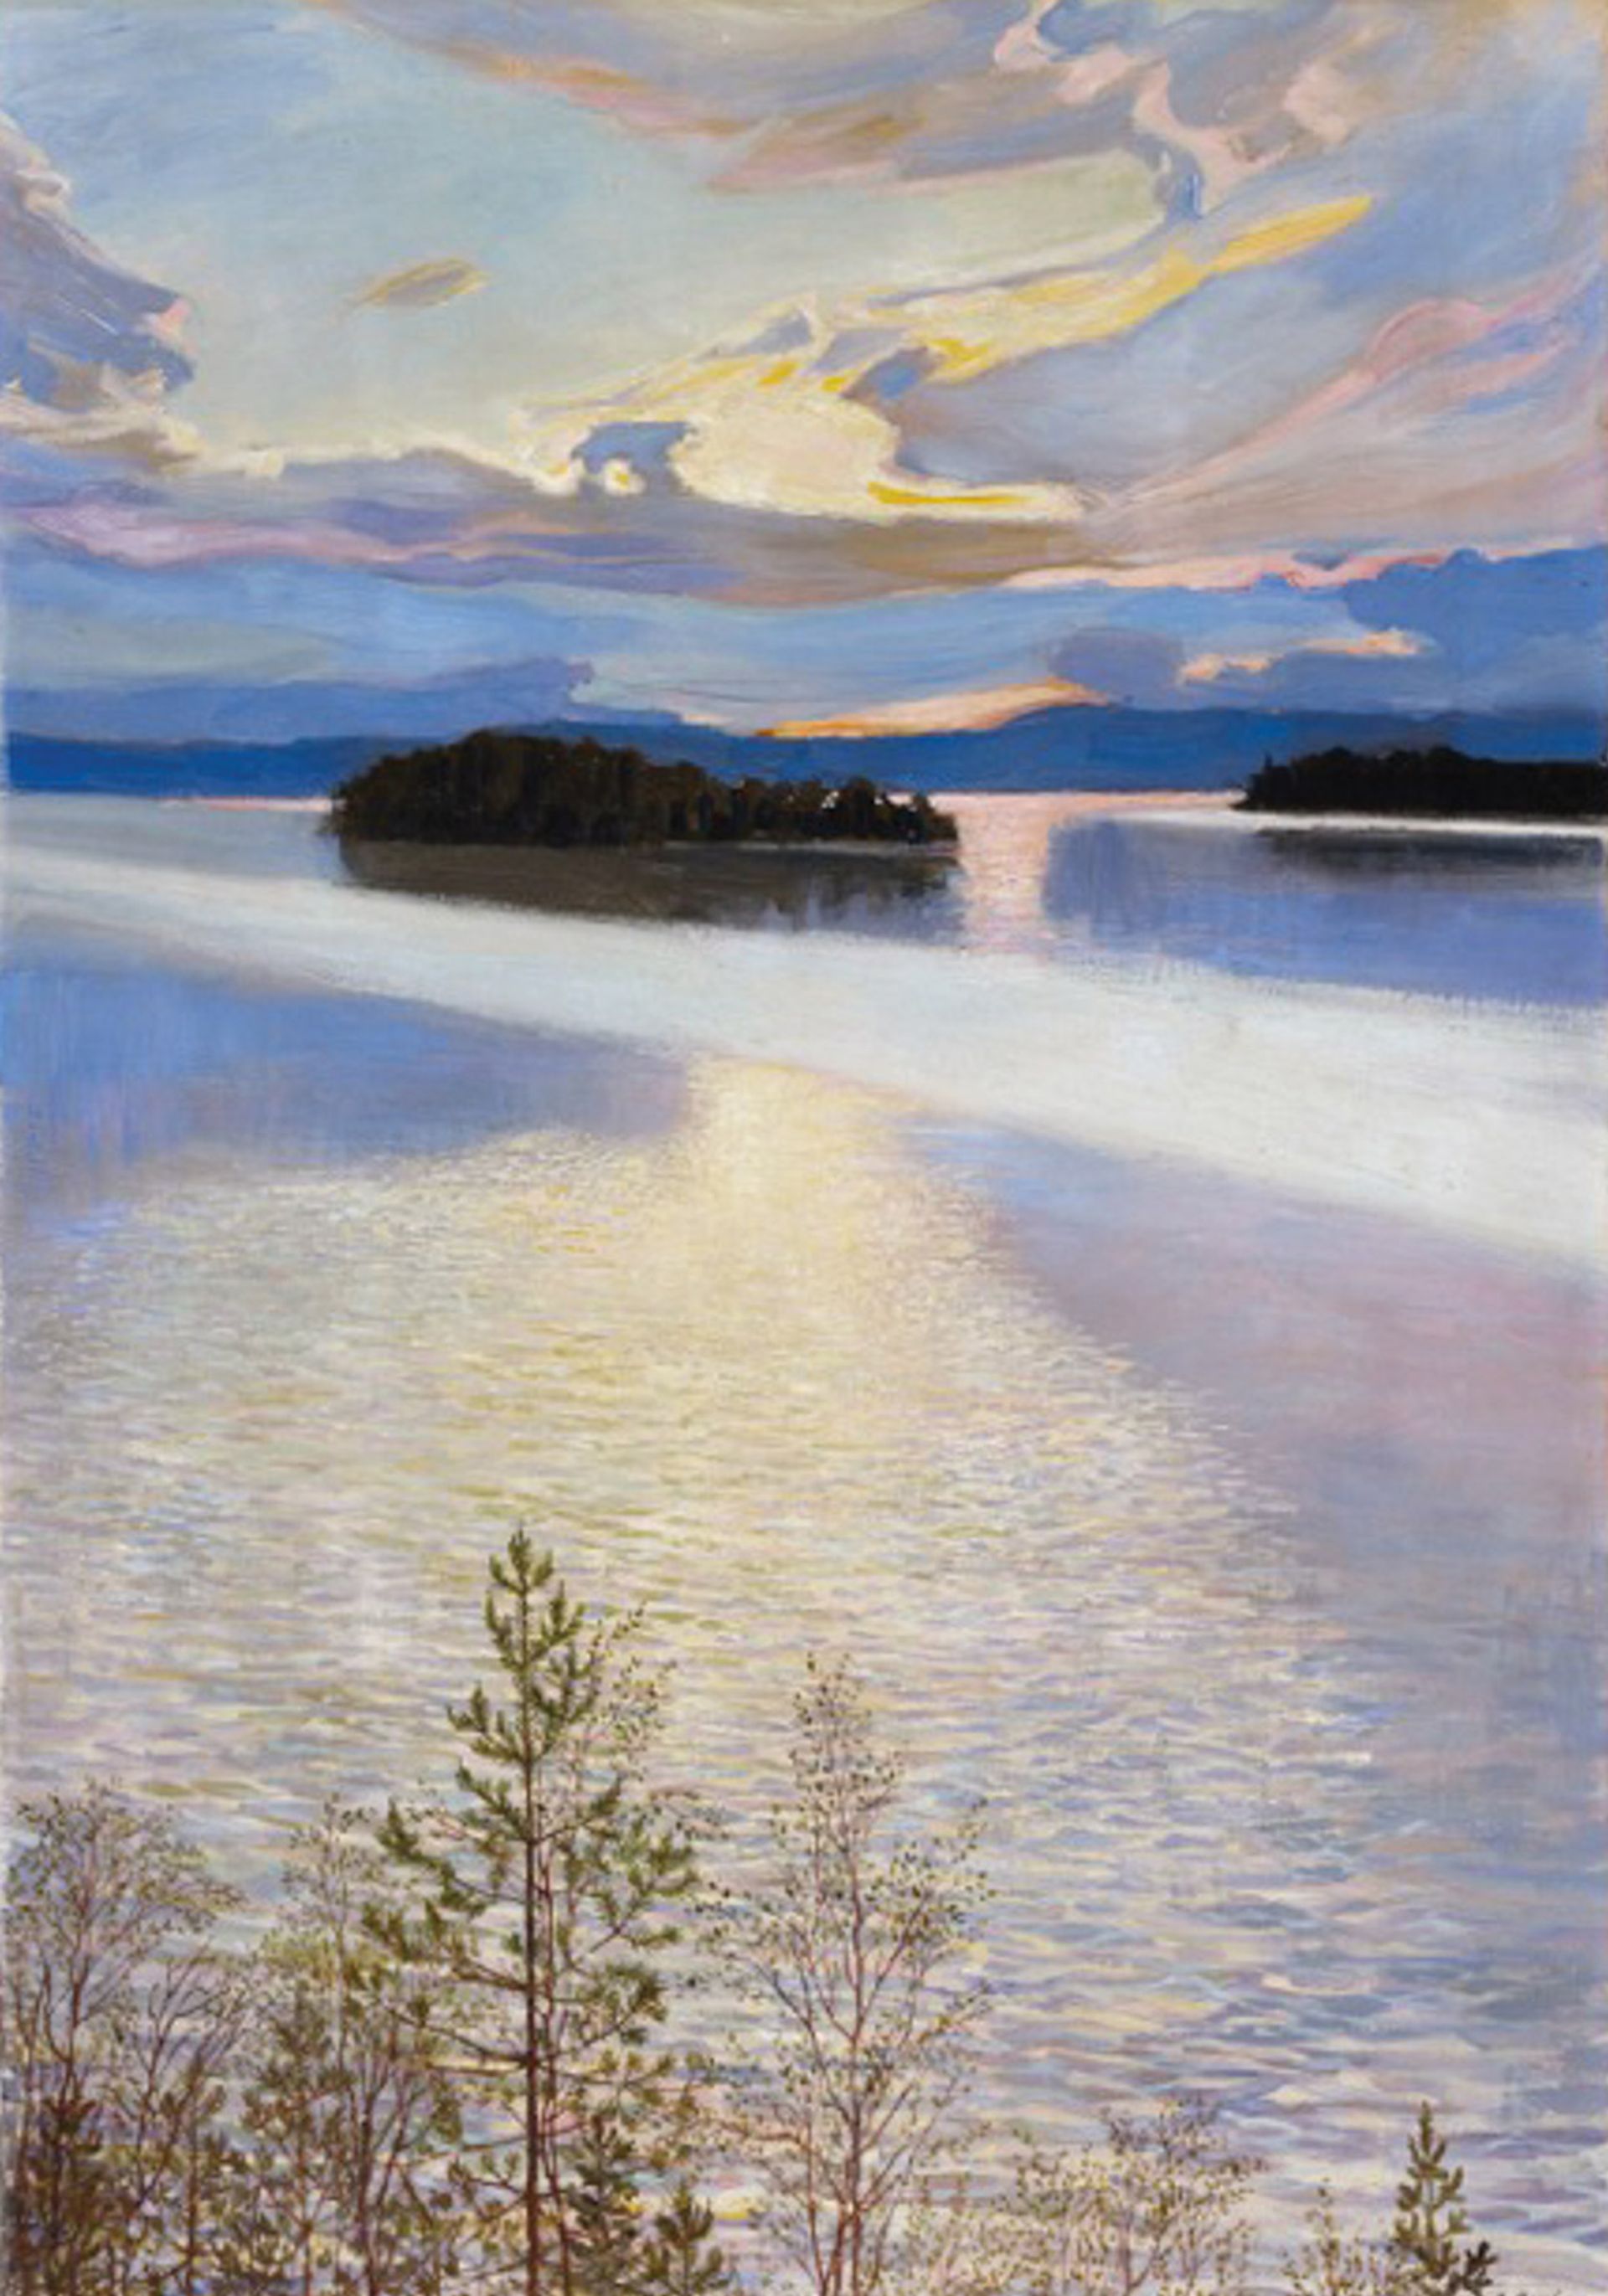 Akseli Gallen-Kallela's Lake View (1901), on loan from Helsinki's Ateneum Art Museum to London's National Gallery Finnish National Gallery / Kirsi Halkola